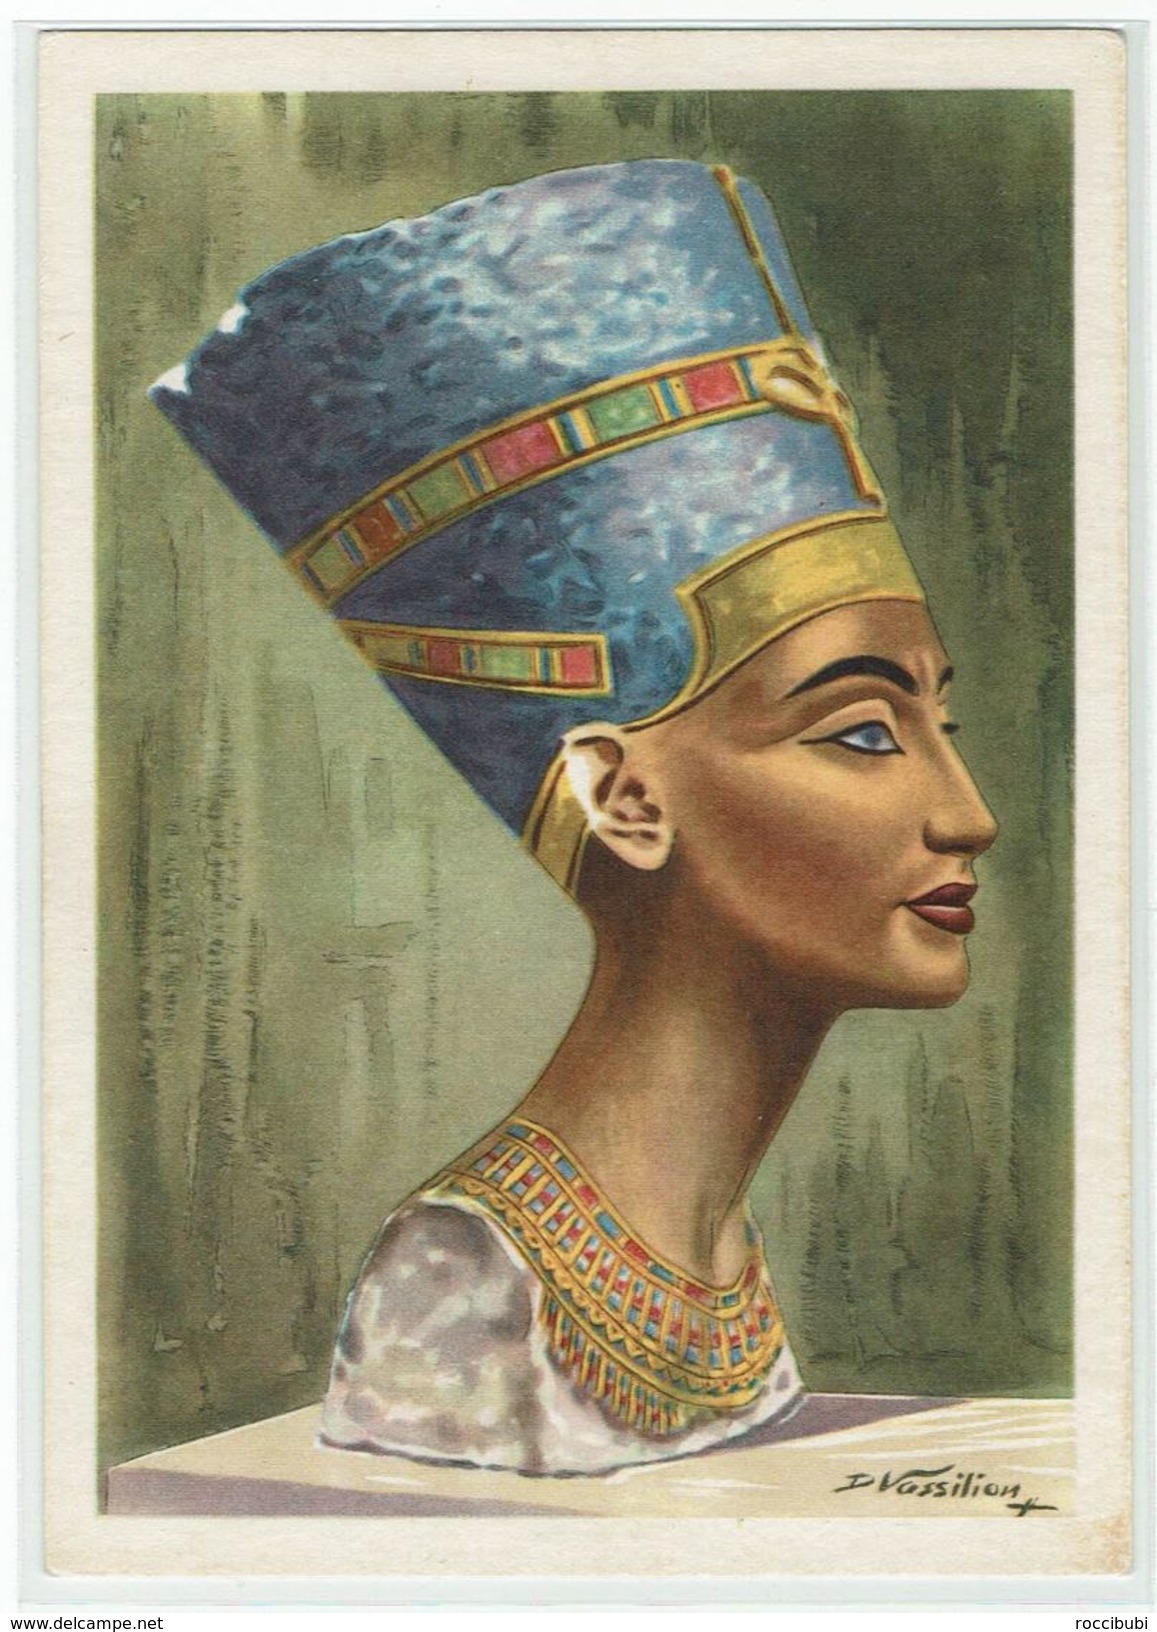 Ägyptische Kunst - Kunstgegenstände